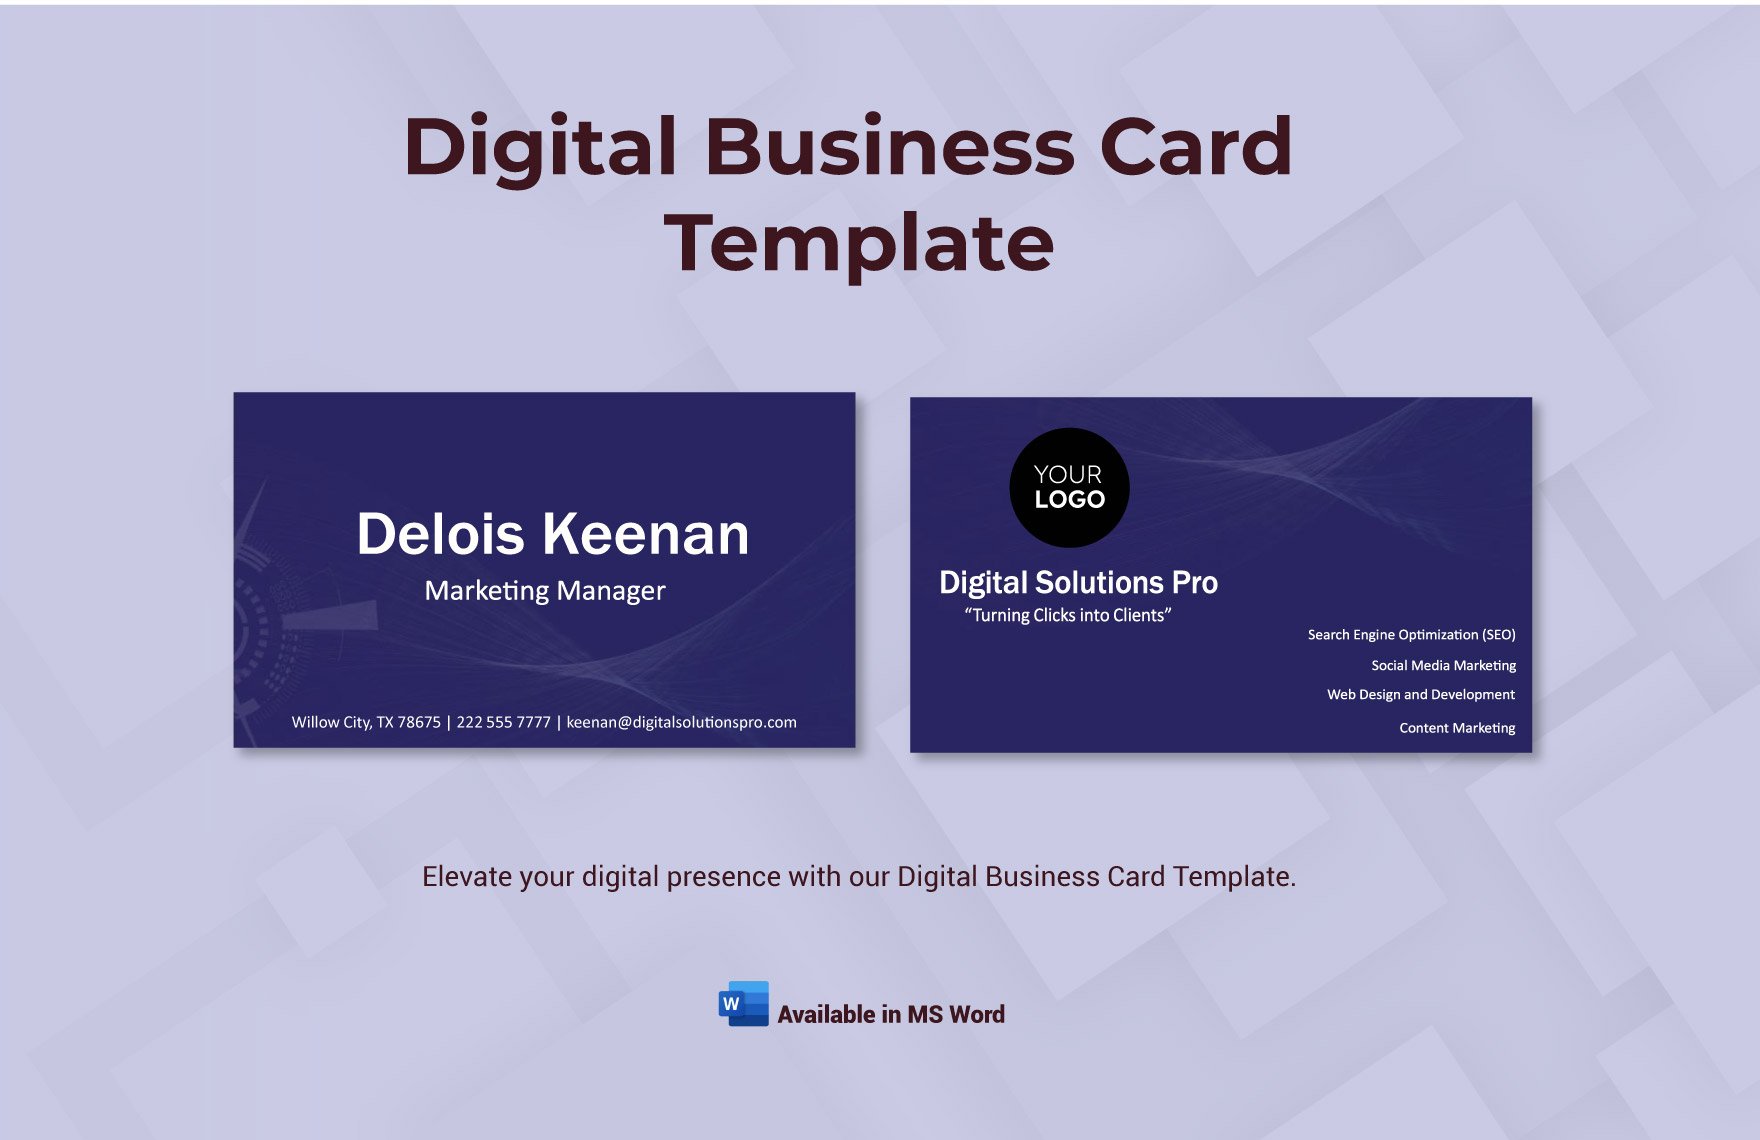 Digital Business Card Template